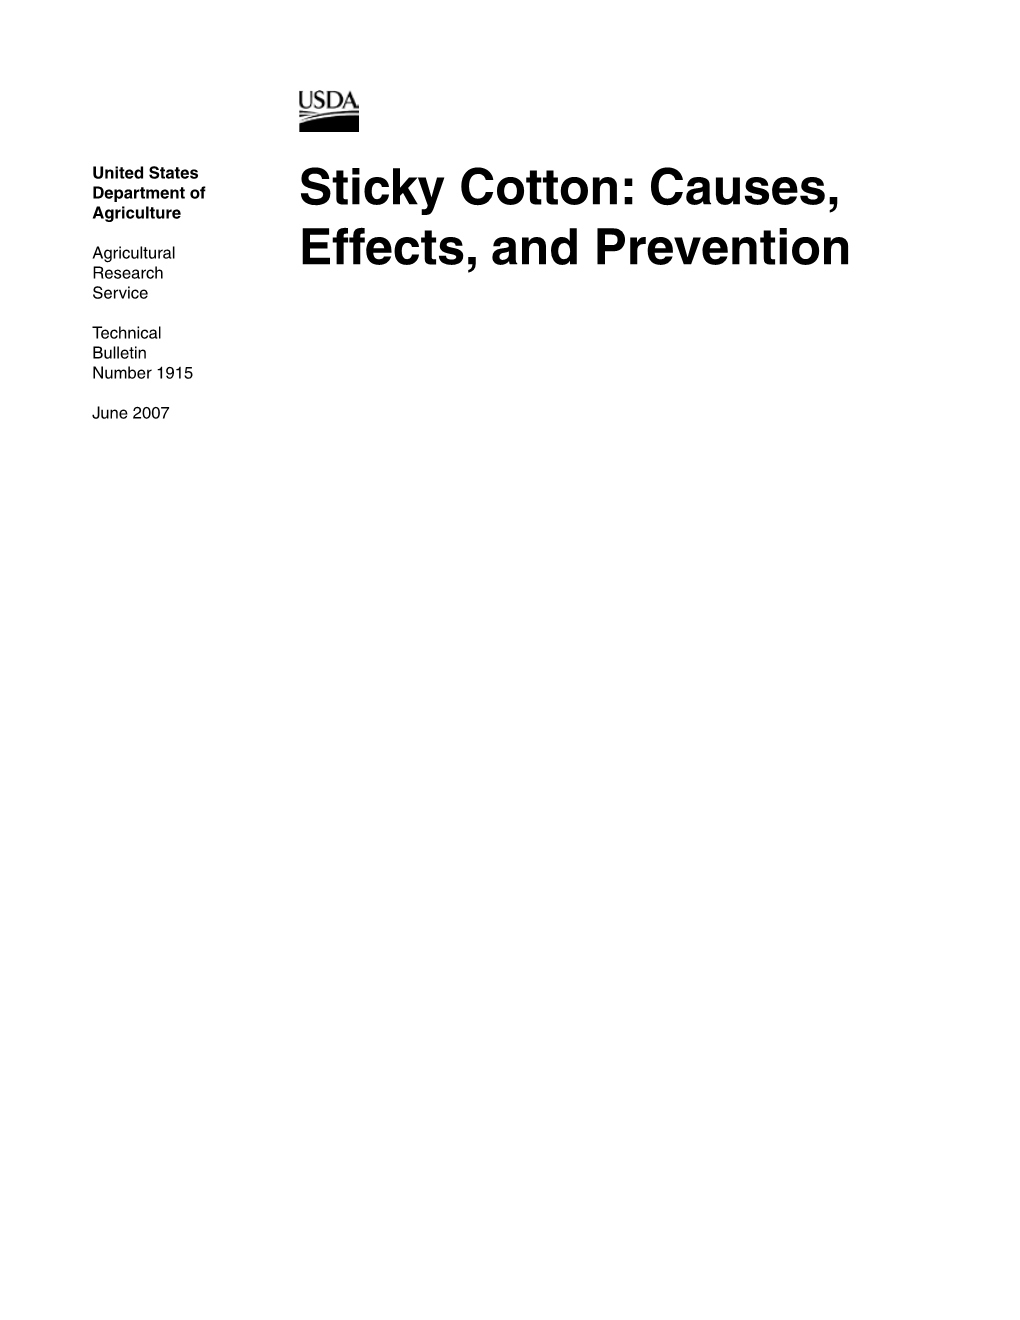 Sticky Cotton: Causes